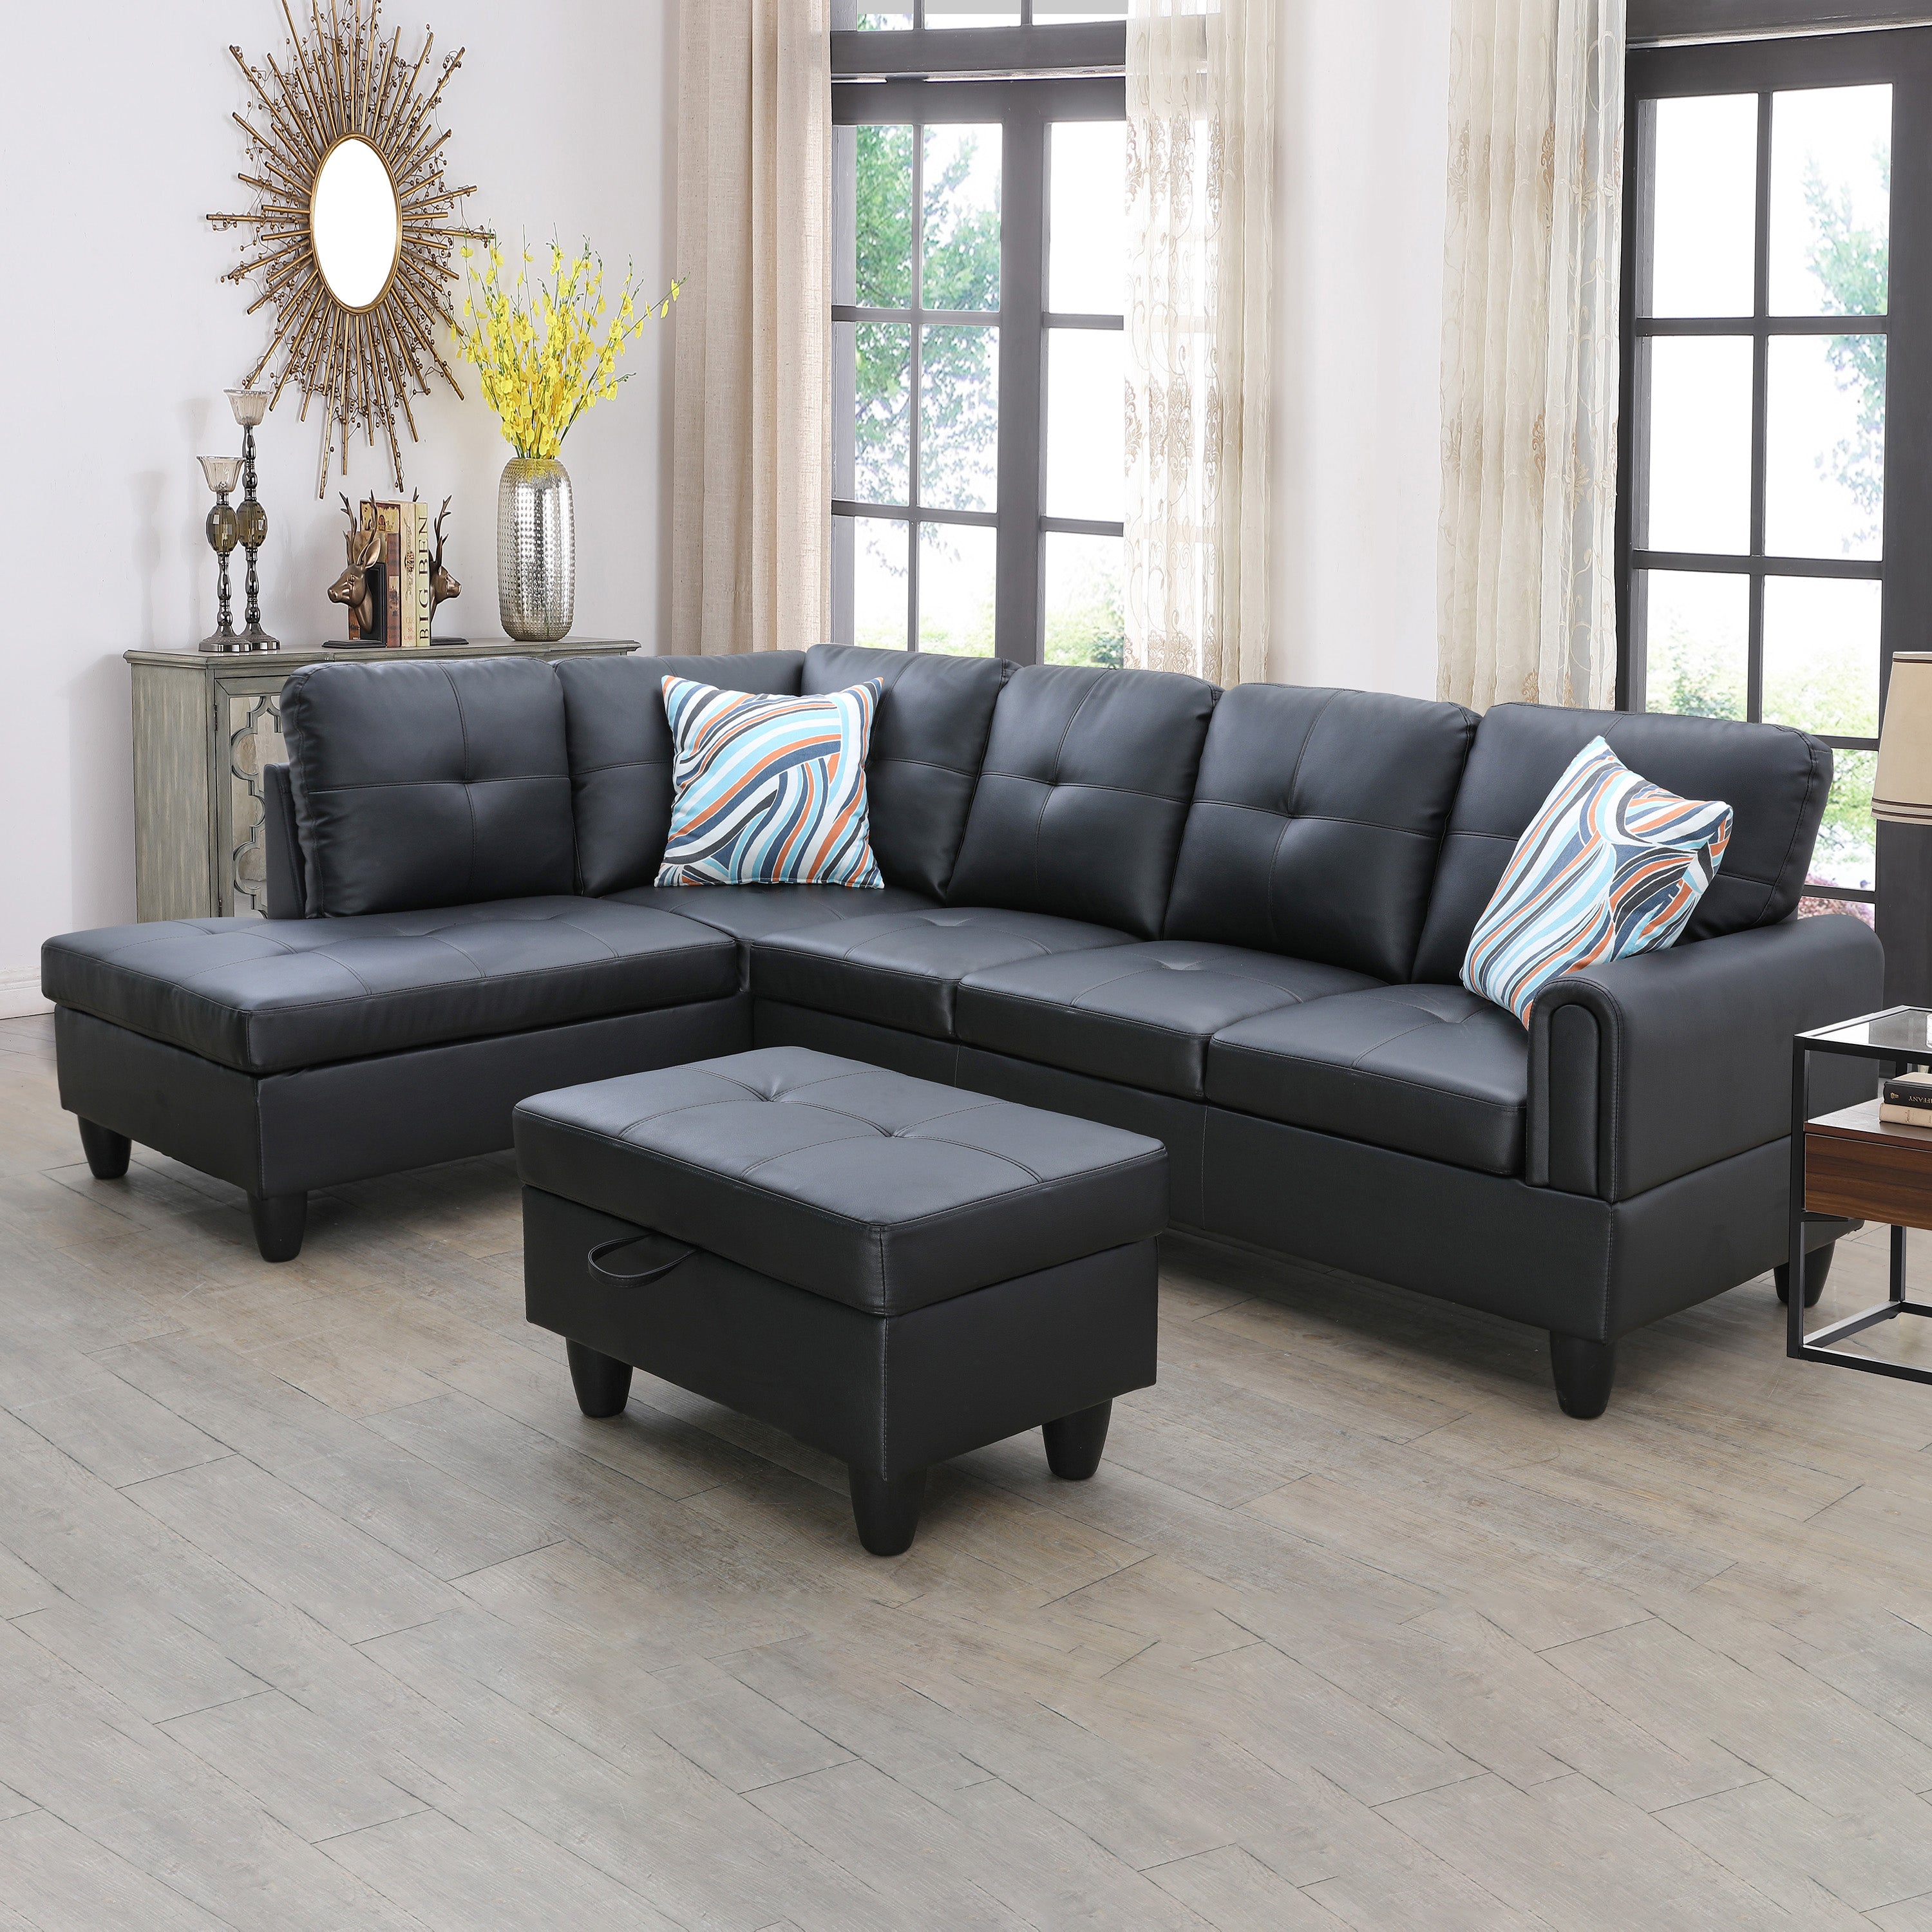 Ainehome Black Faux Leather Living Room Sofa Set